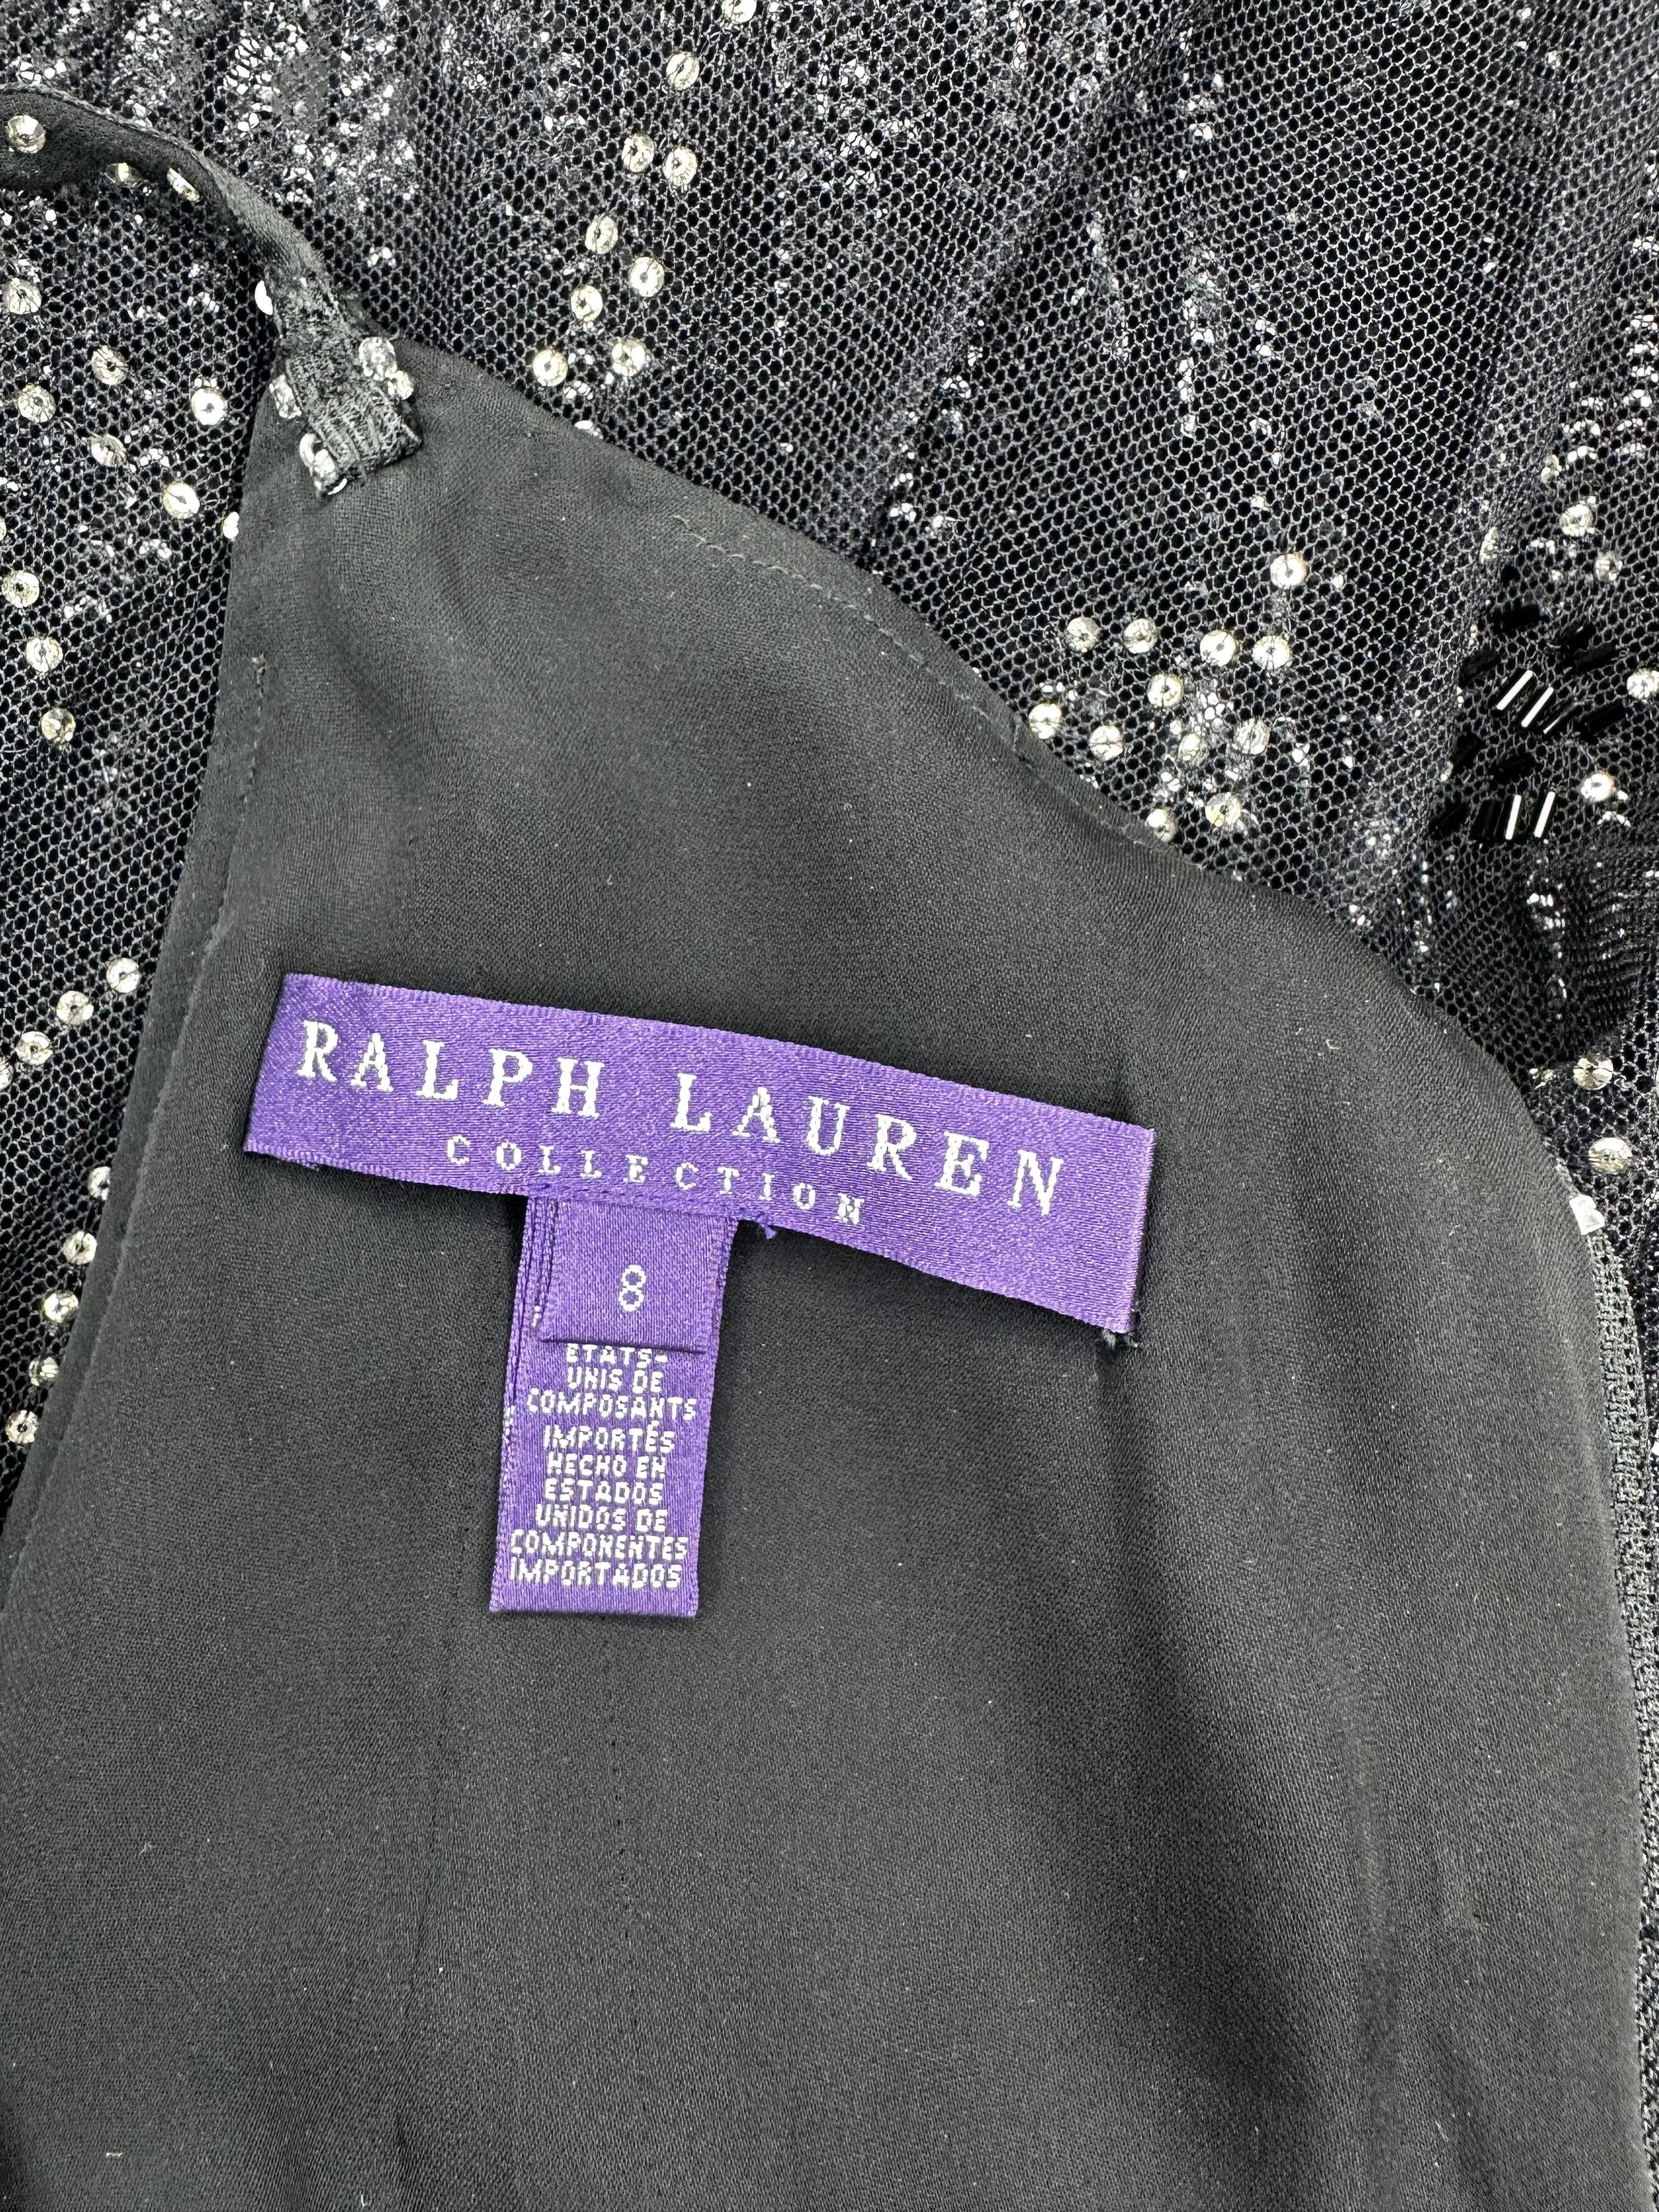 Ralph Lauren Collection beaded maxi dress For Sale 1